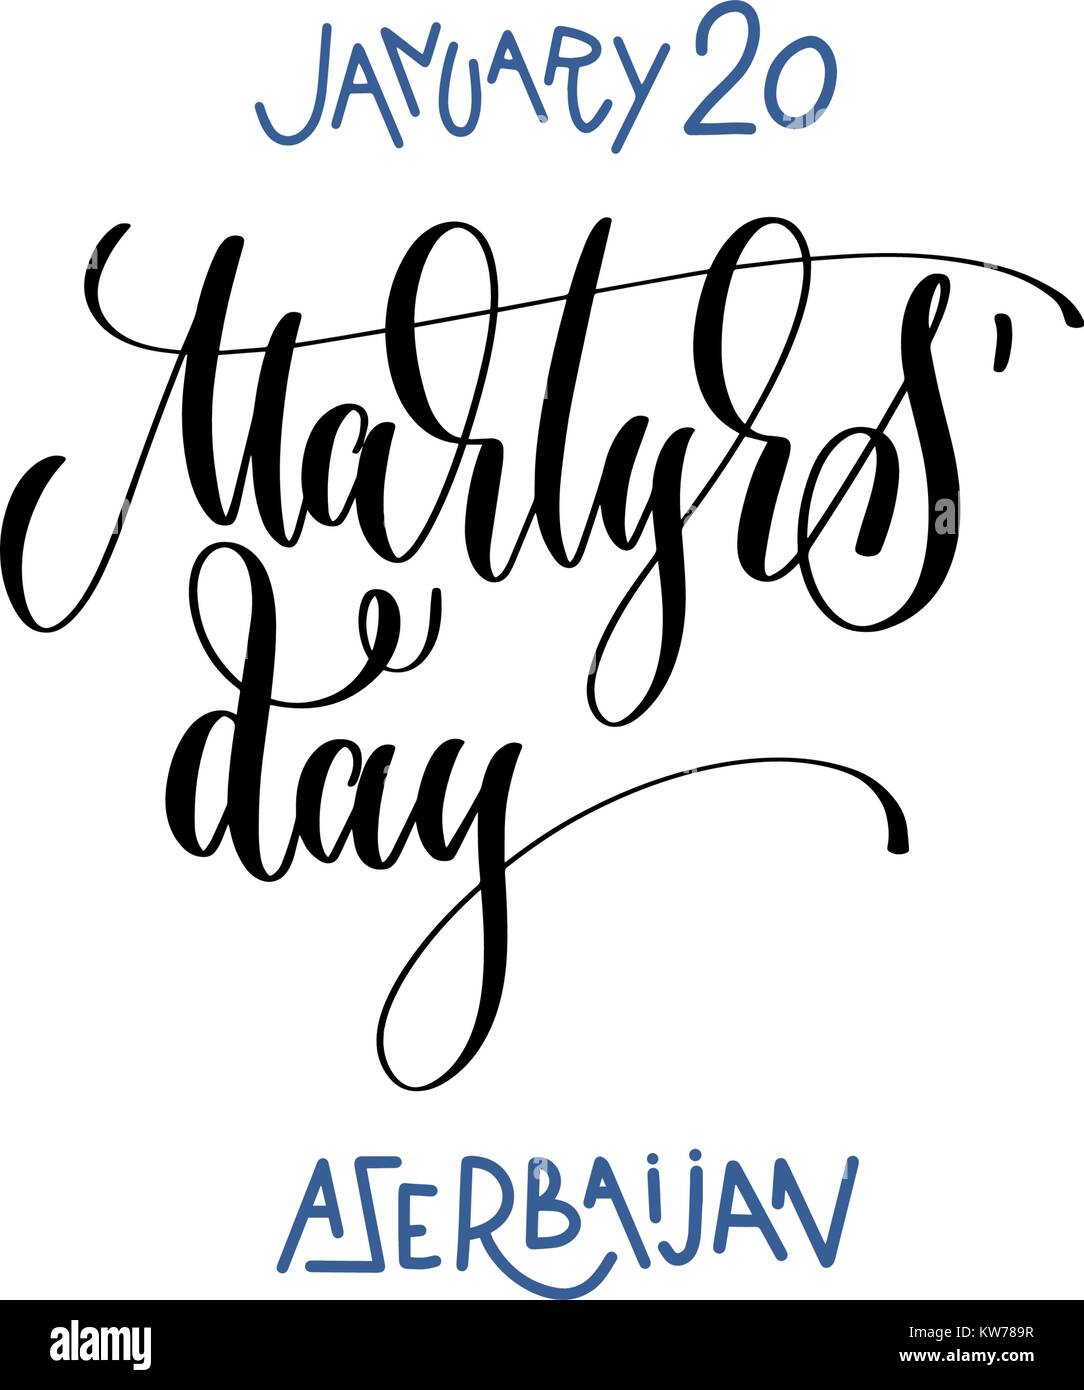 january 20 - Martyrs' day - azerbaijan, hand lettering inscripti Stock Vector